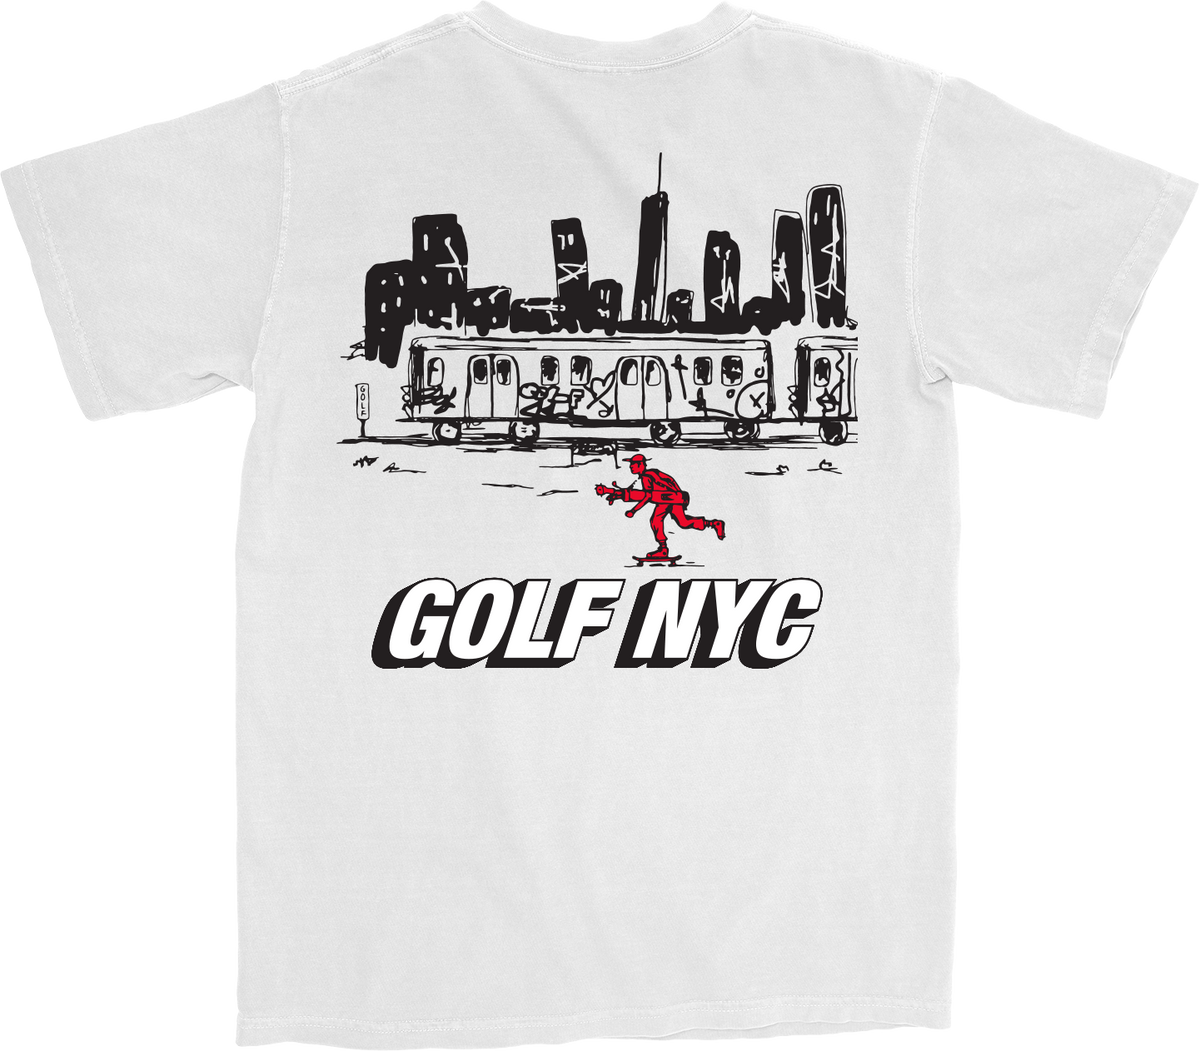 GOLF NYC (White/Black/Red)